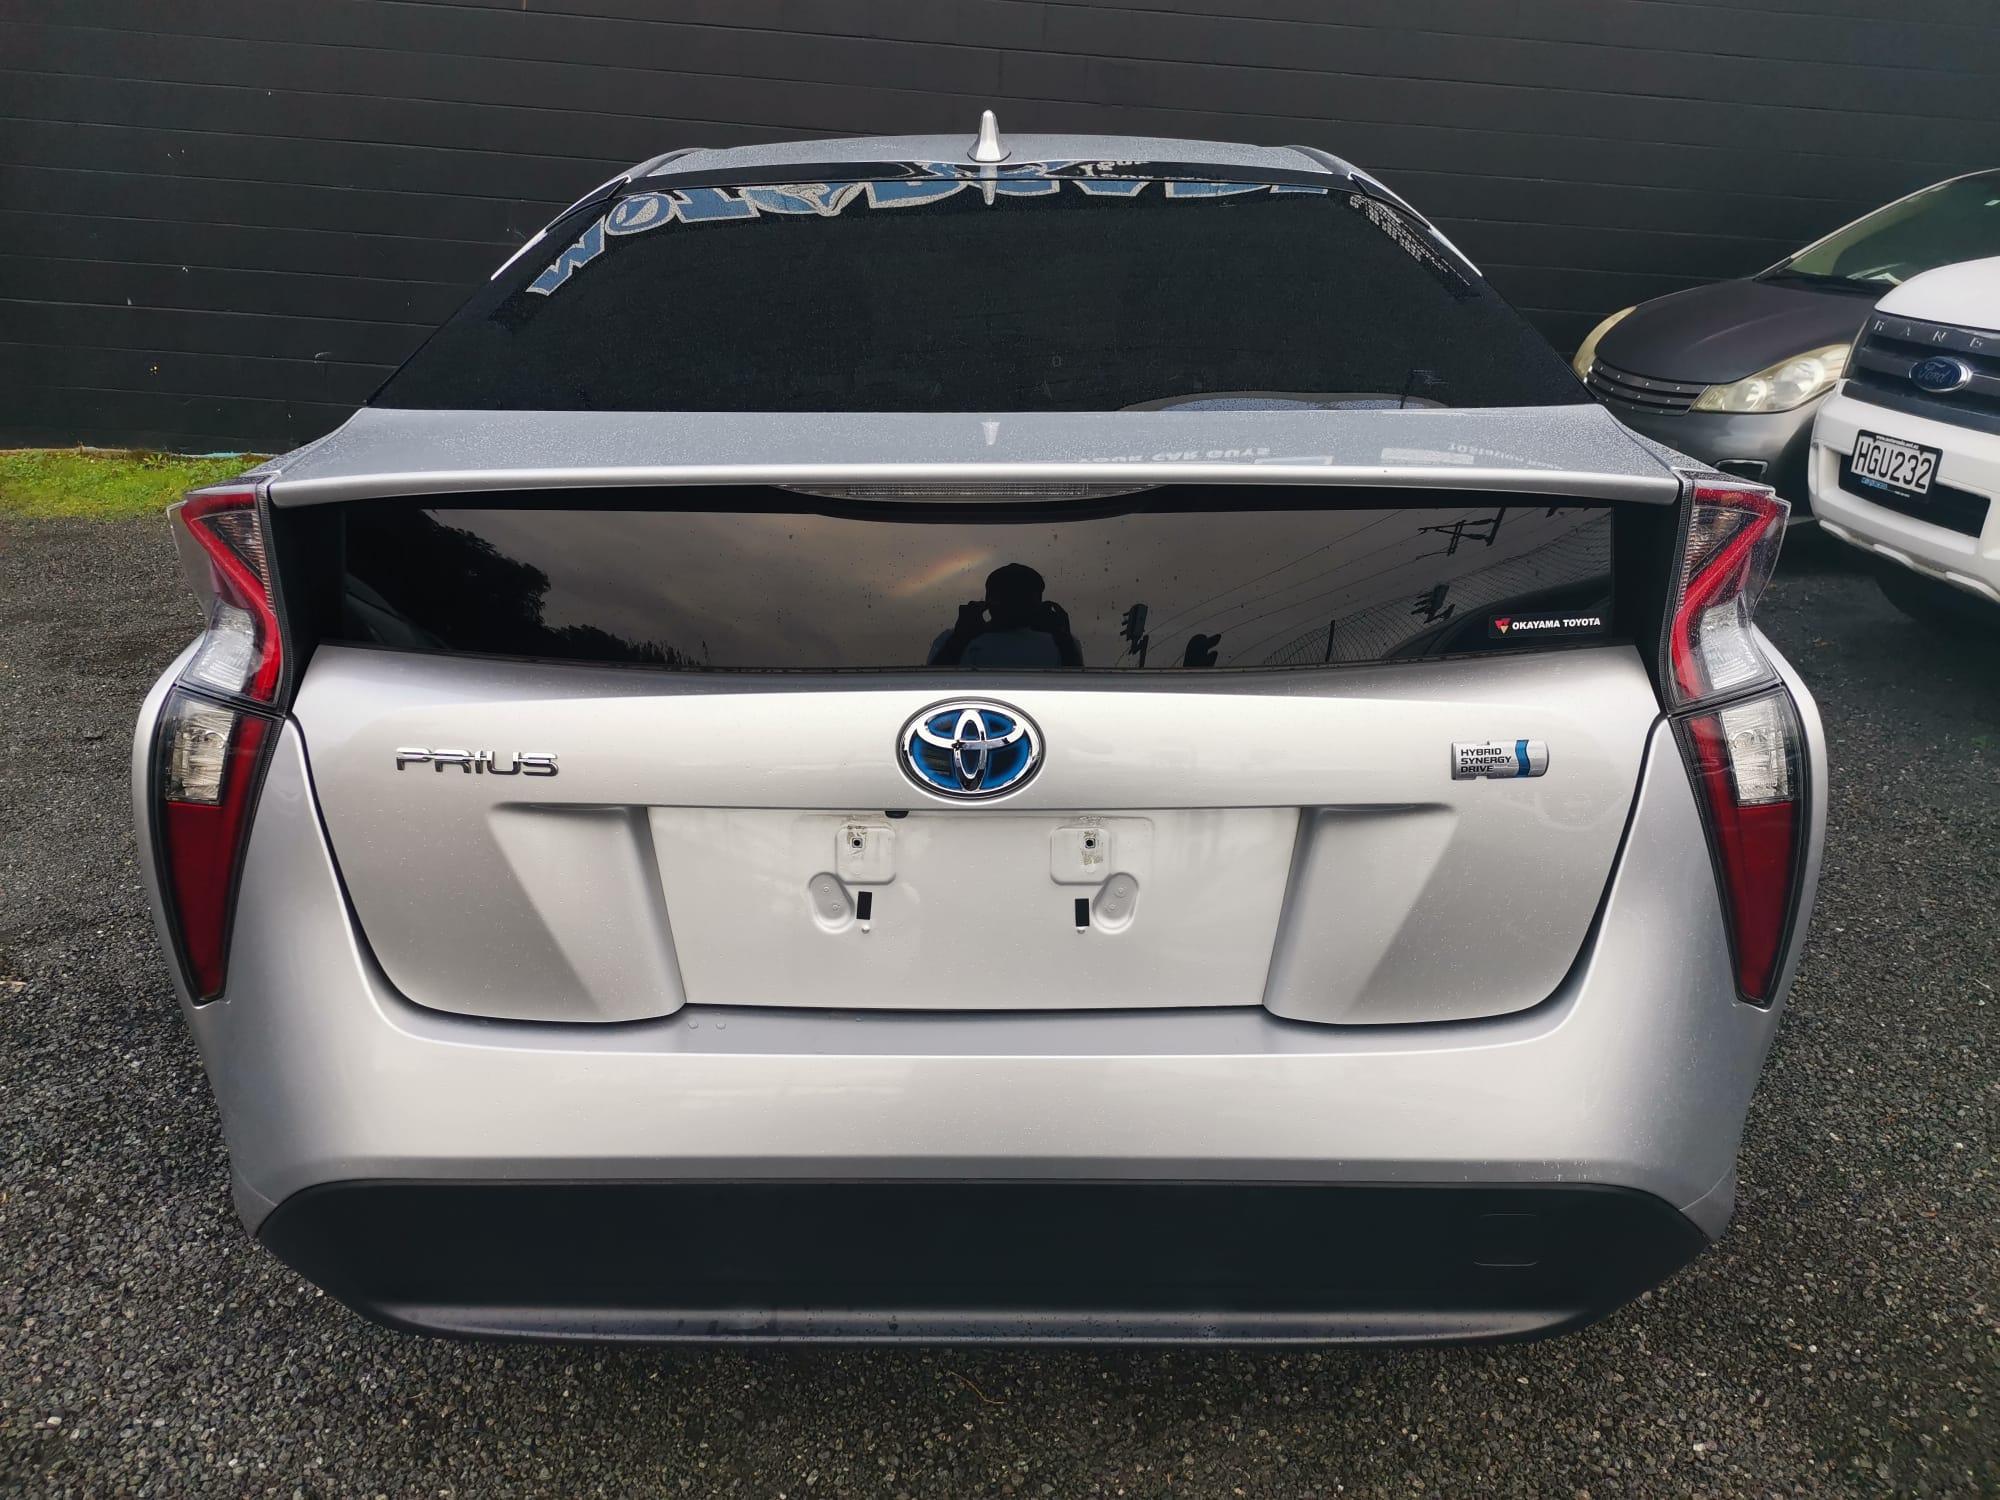 Toyota Prius 2017 Image 4